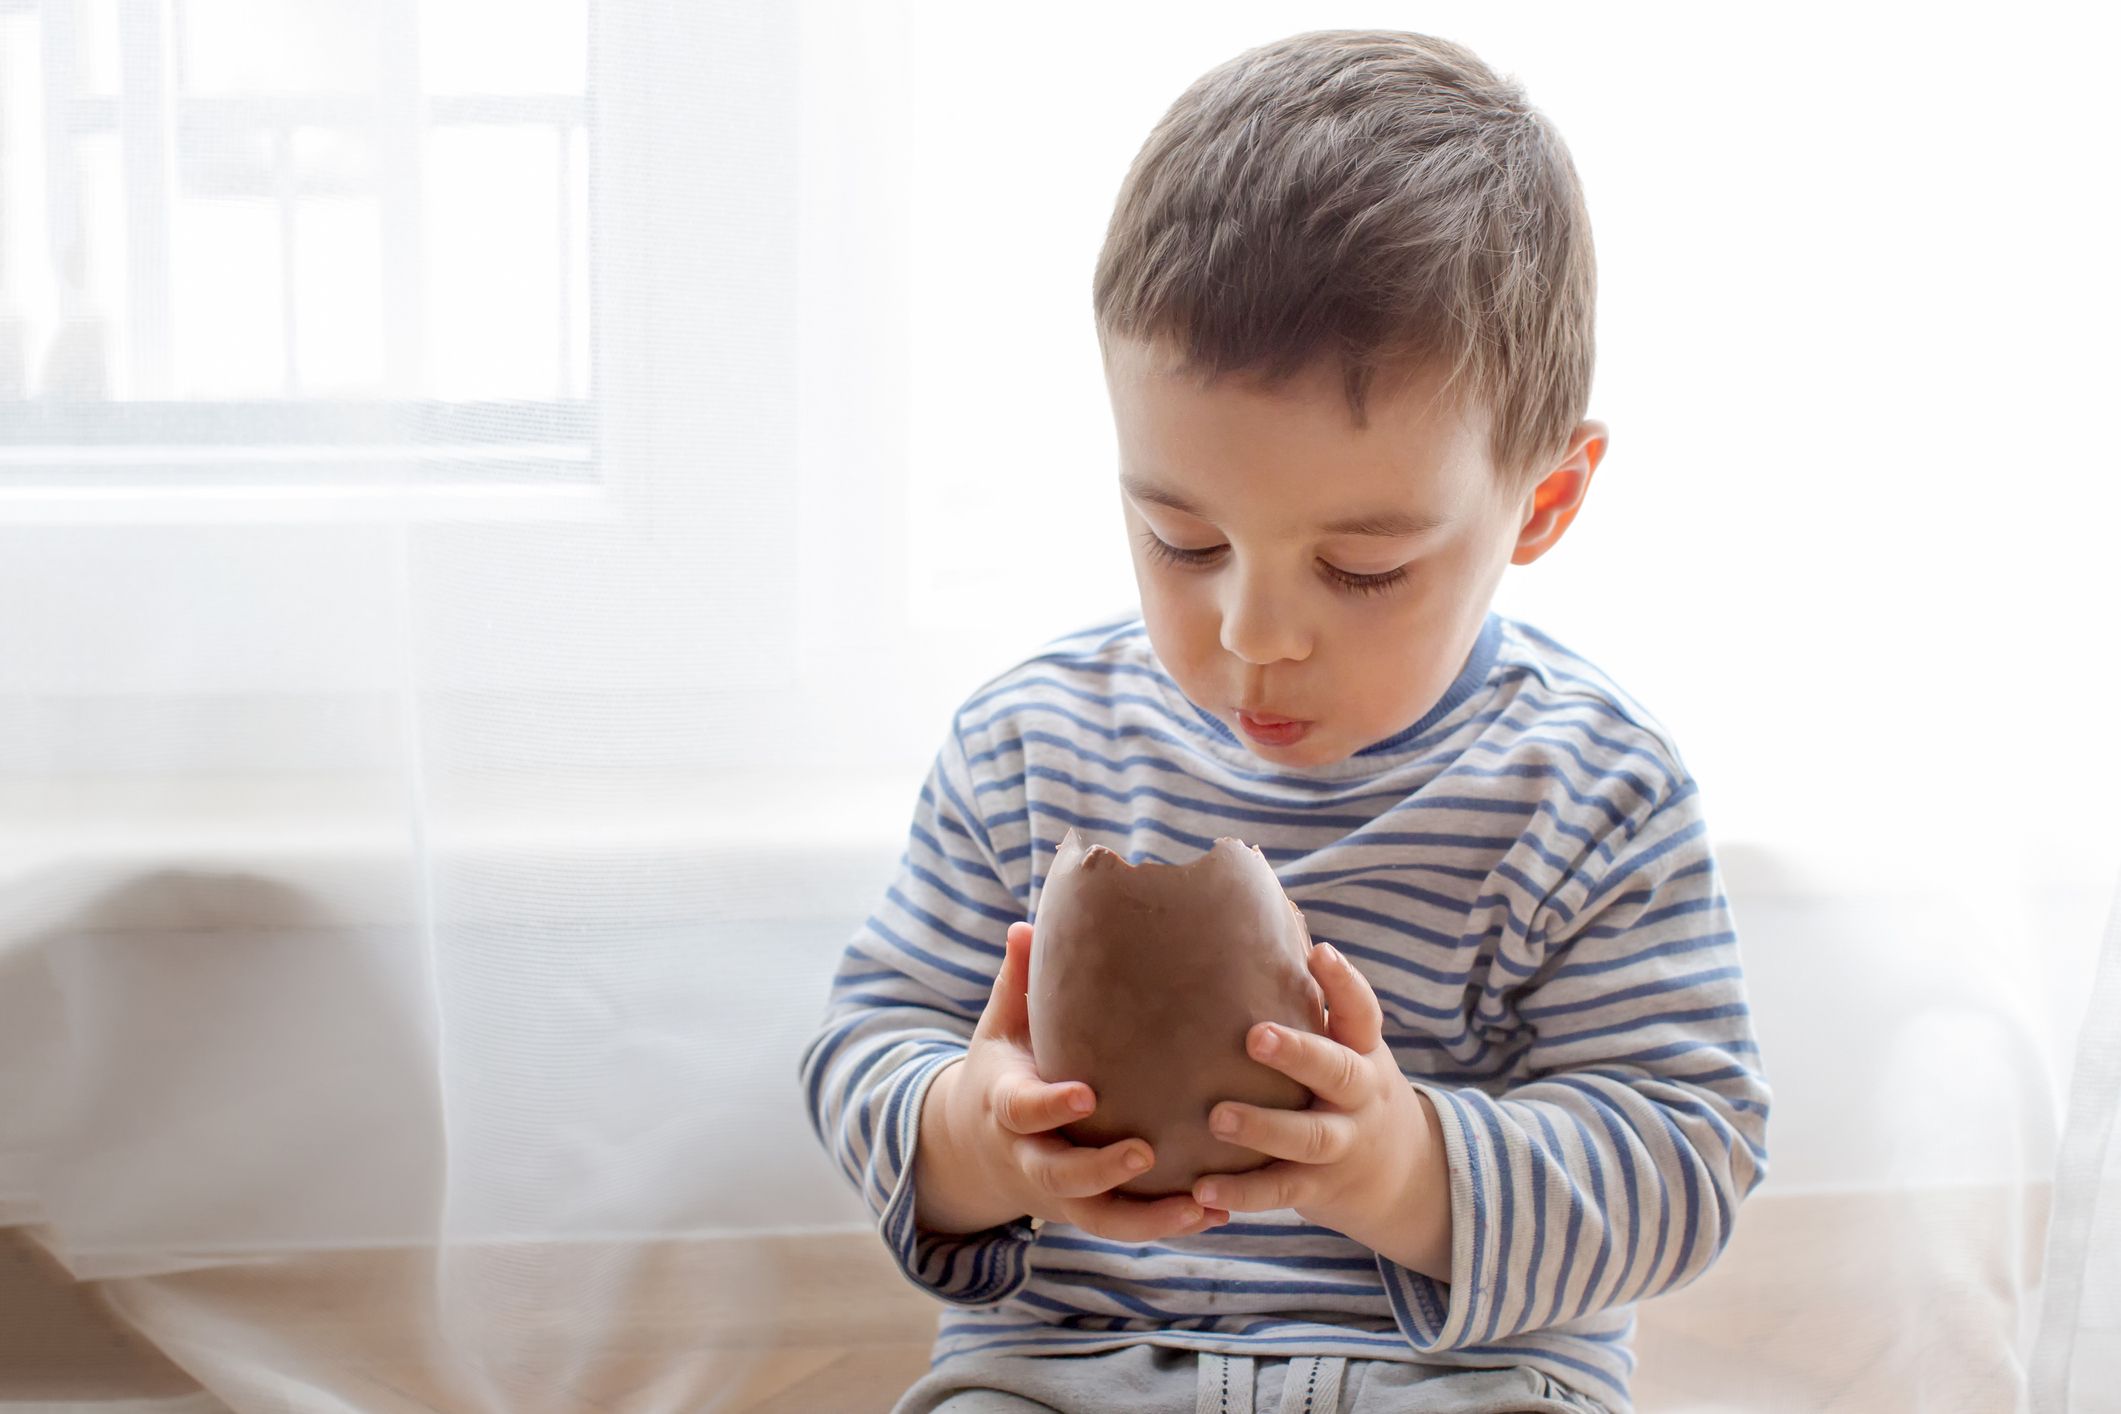 A little boy eating chocolate. | Source: Shutterstock